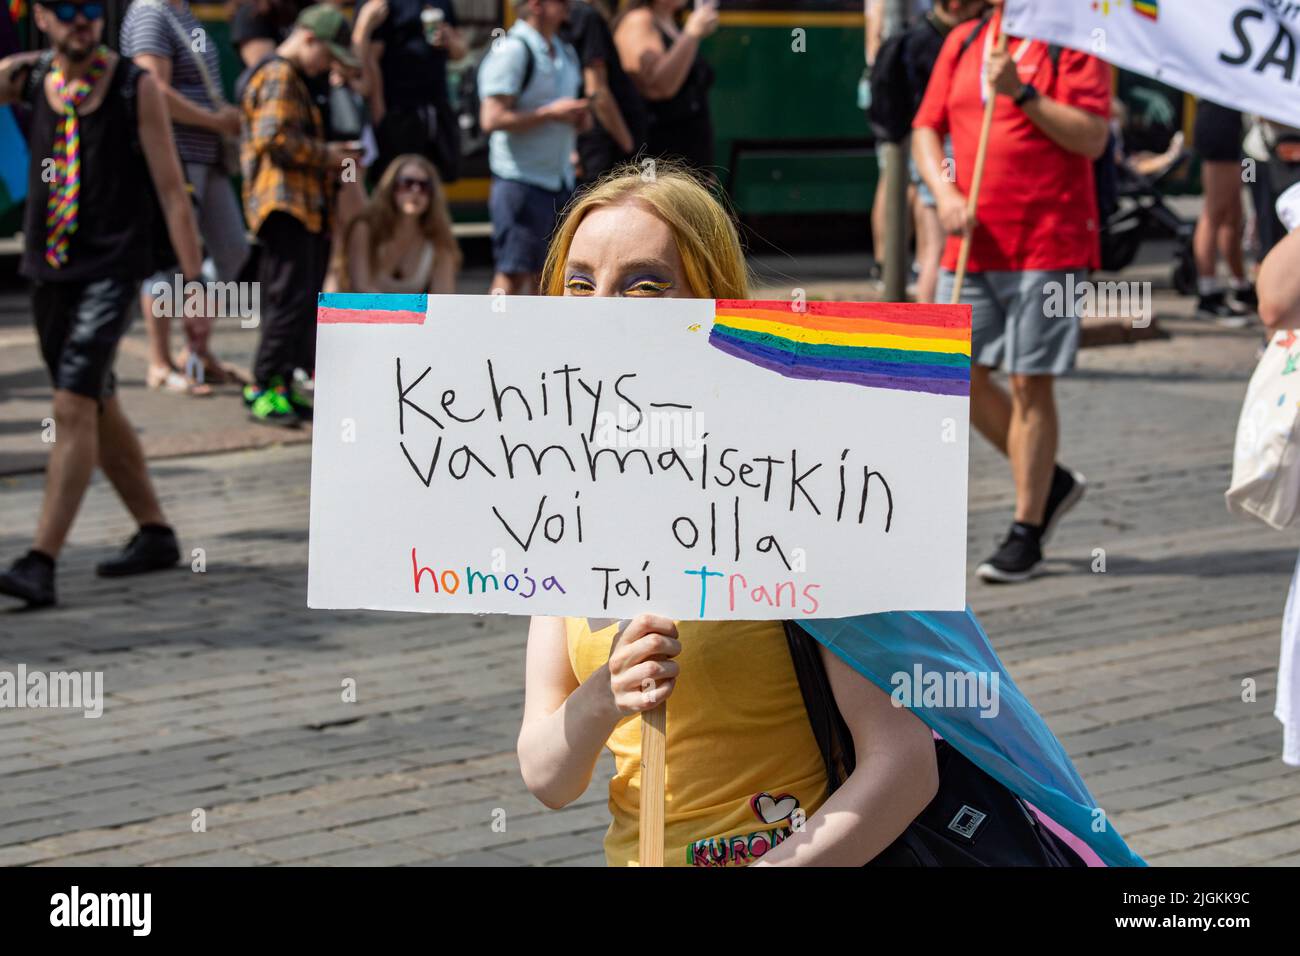 Kehitysvammaisetkin olla voi homoja ta trans. Femme avec signe à la parade Helsinki Pride 2022 à Mannerheimintie, Helsinki, Finlande. Banque D'Images